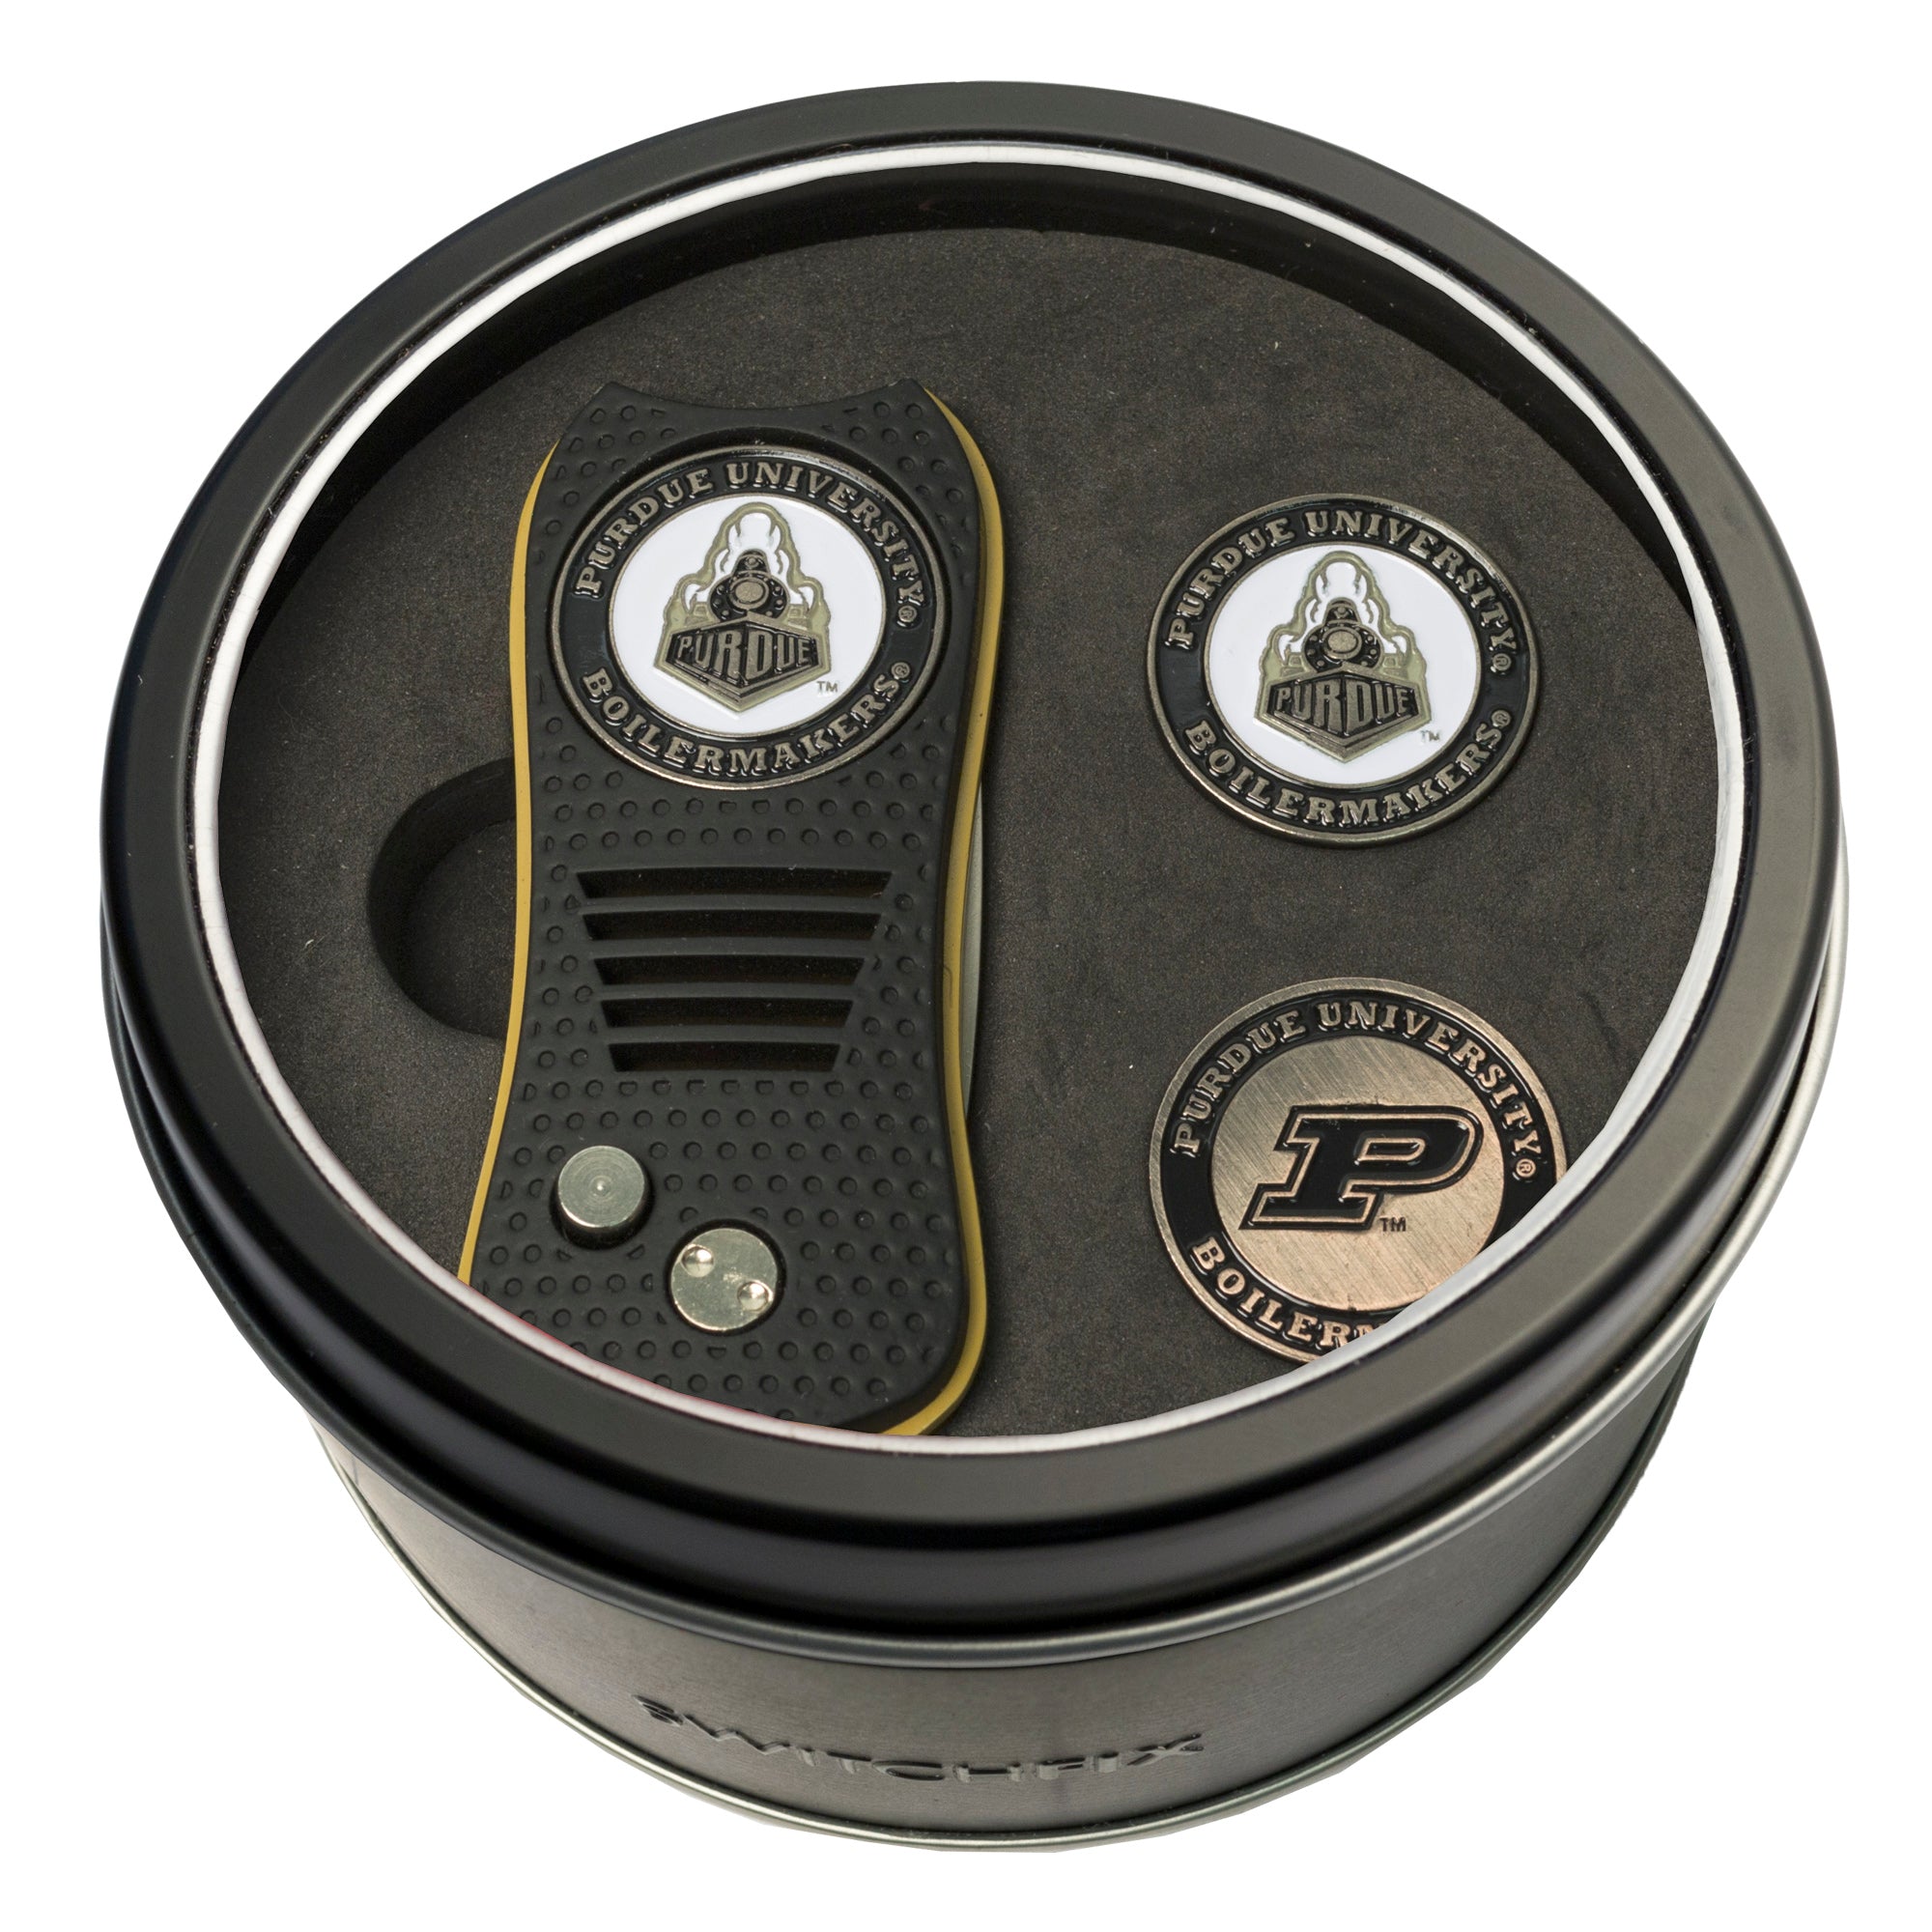 Purdue Boilermakers Switchblade Divot Tool + 2 Ball Marker Tin Gift Set